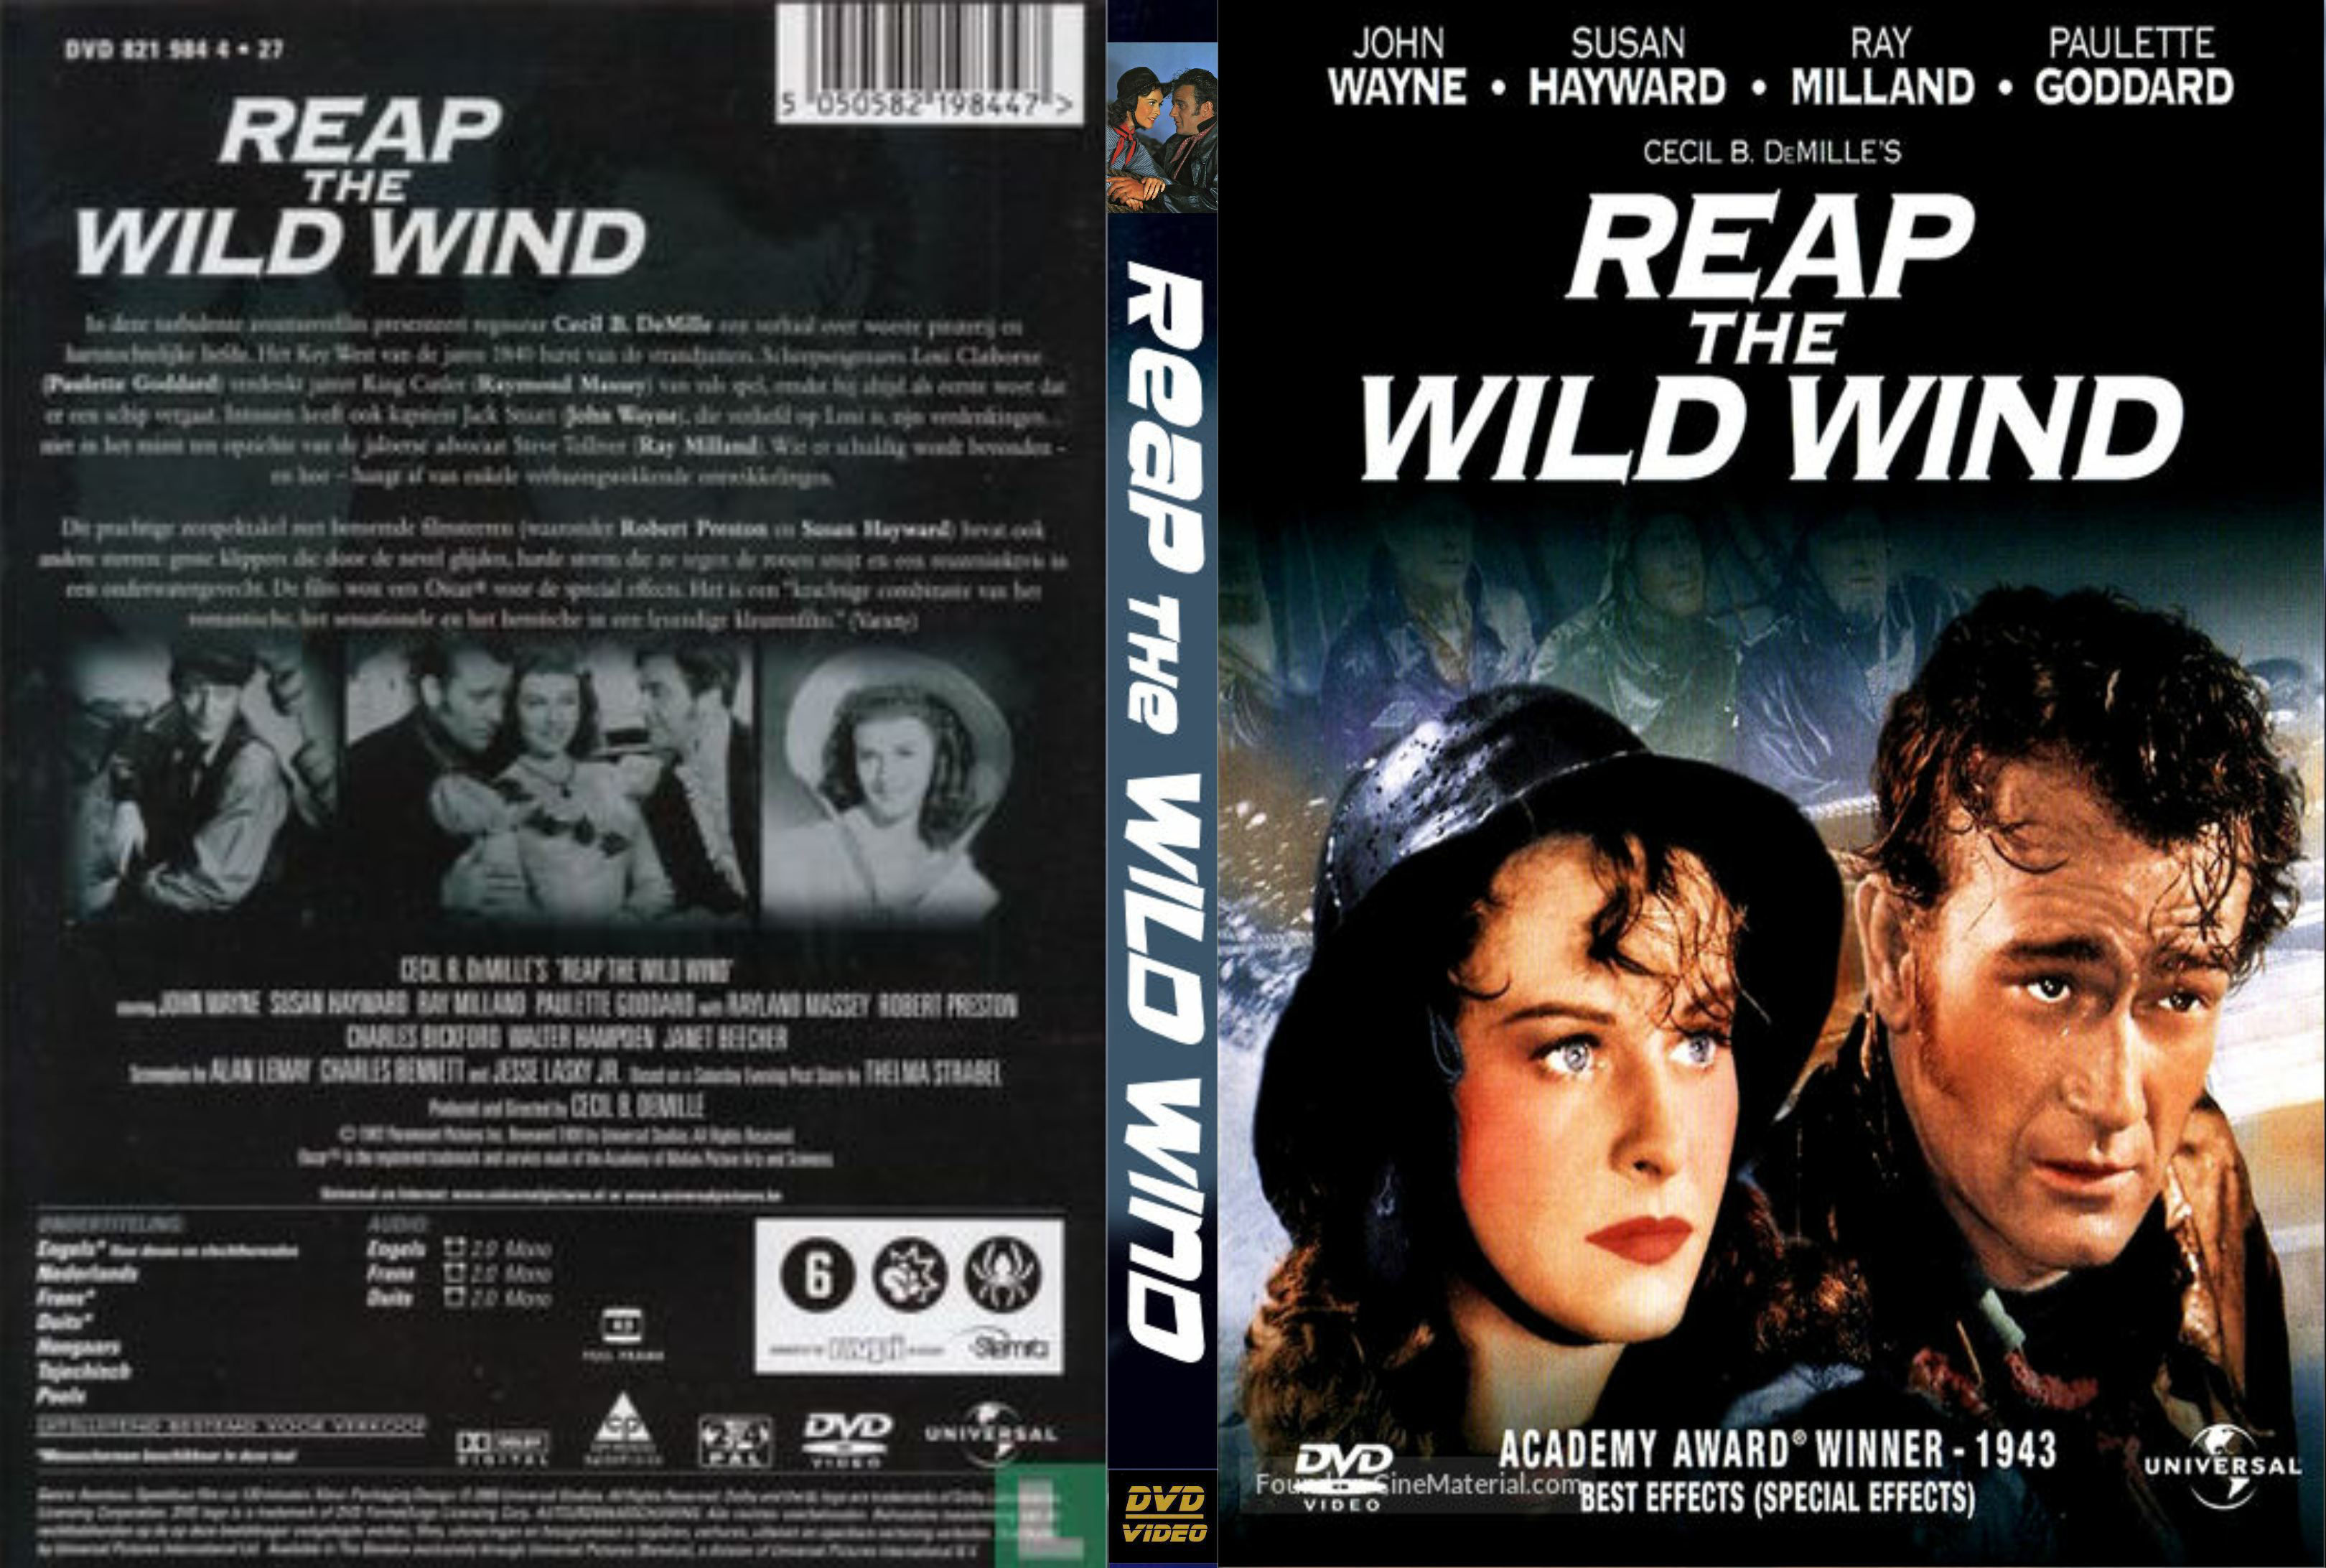 Reap the wild wind 1942 ( John Wayne )